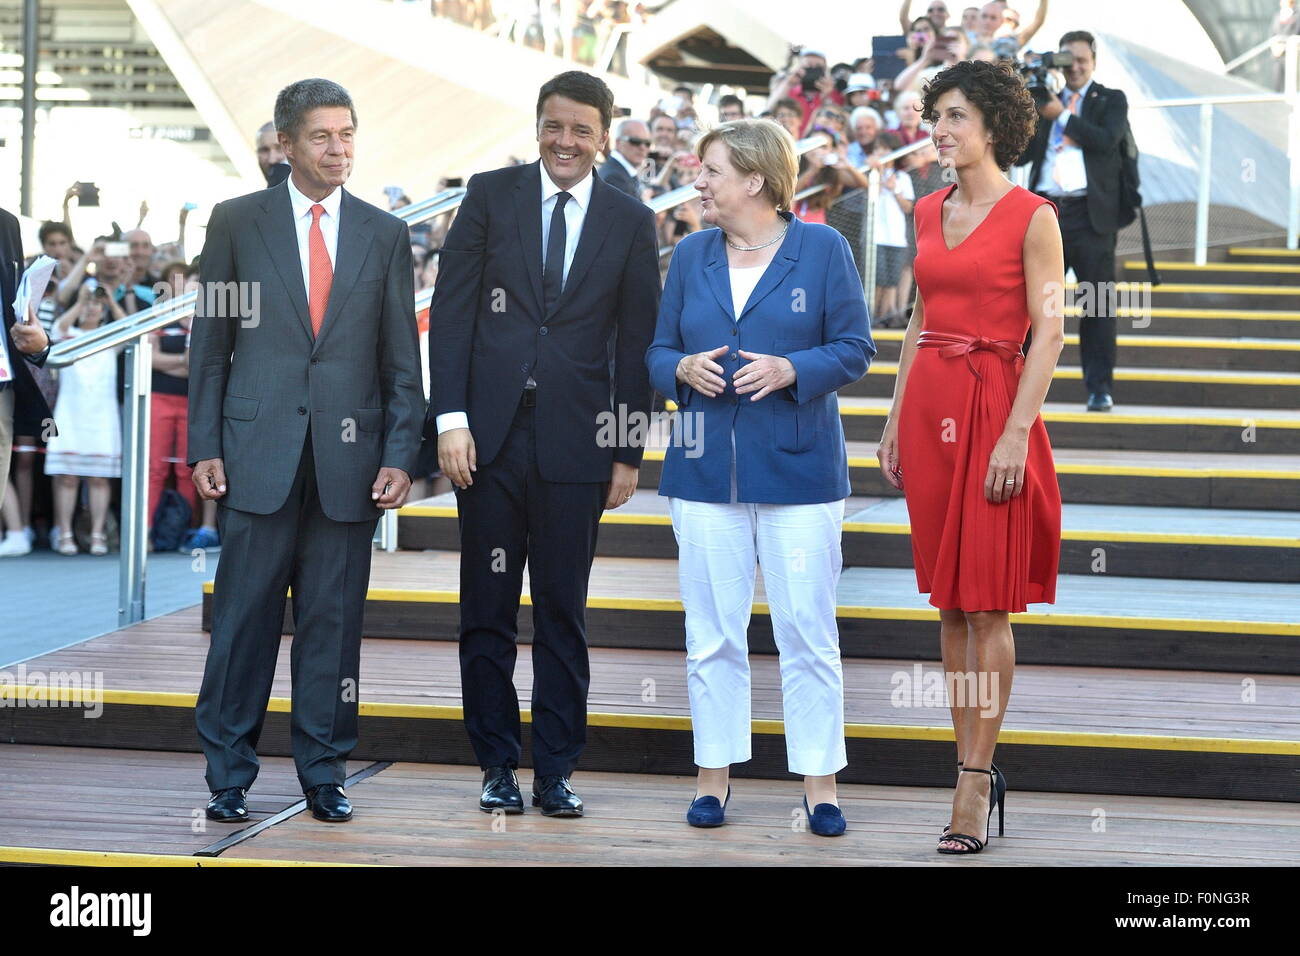 Bundeskanzlerin Angela Merkel mit Ehemann Joachim Sauer, der Premierminister Matteo Renzi und Frau Agnese Landini. Expo 2015. Mailand. Italien. 17.08.2015 Stockfoto